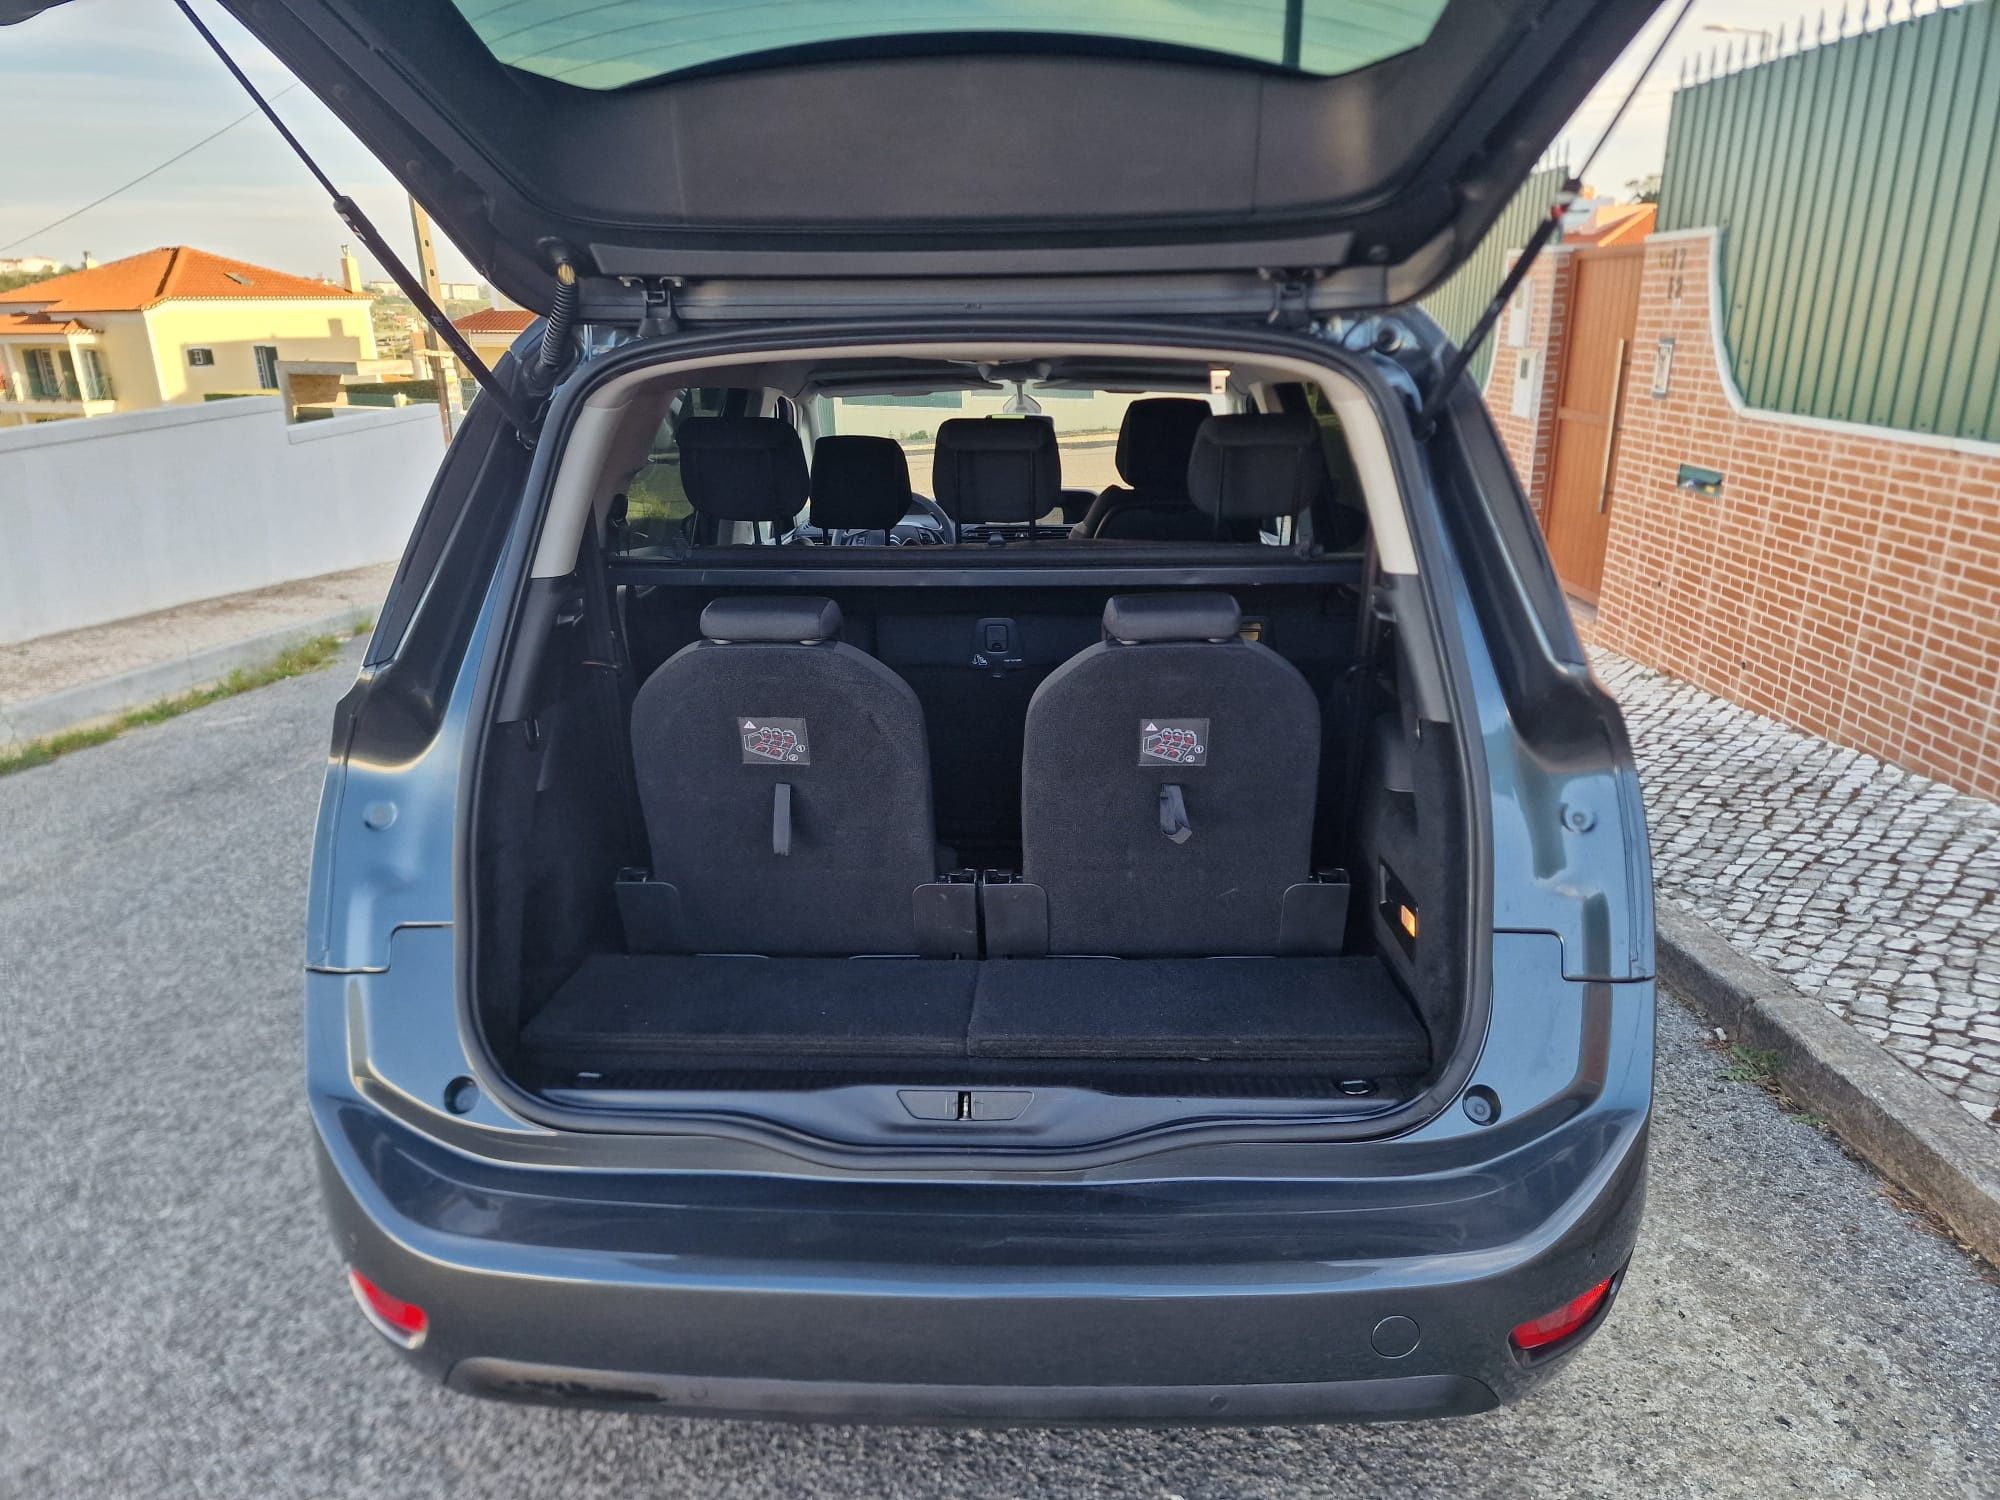 Citroën C4 Gran Picasso 1.6 Hdi 120cv Ano 2015 7 lugares Garagem nova